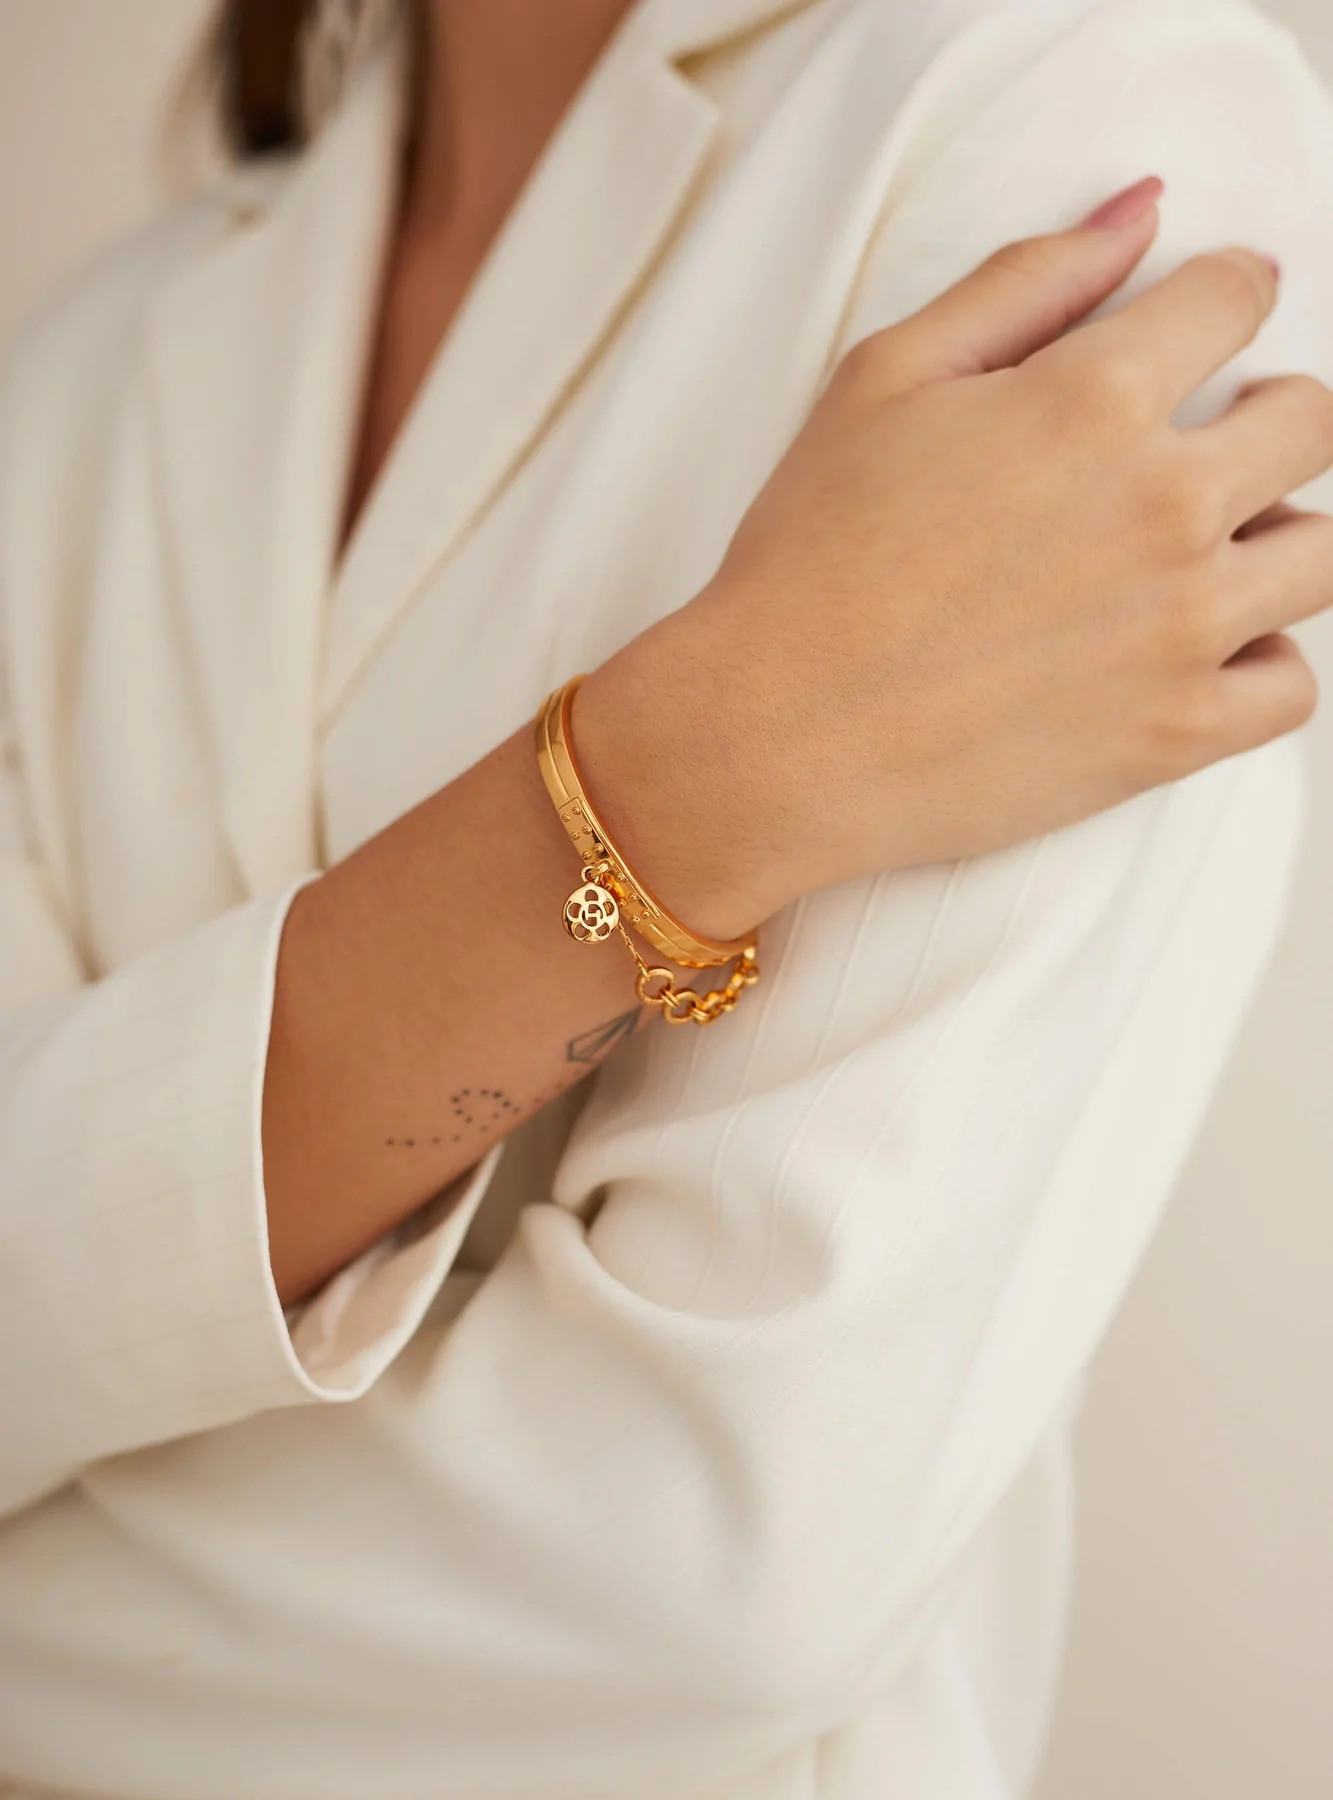 Gold Bracelets For Everyday Wear